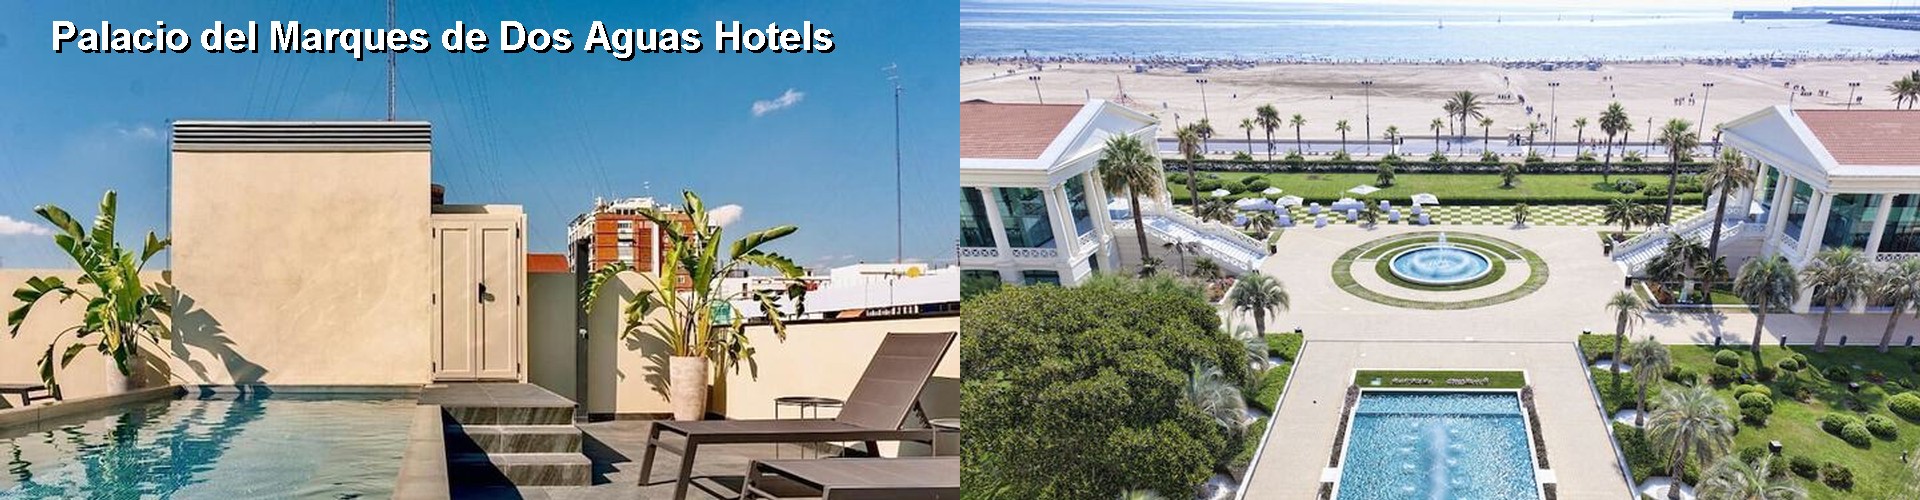 5 Best Hotels near Palacio del Marques de Dos Aguas